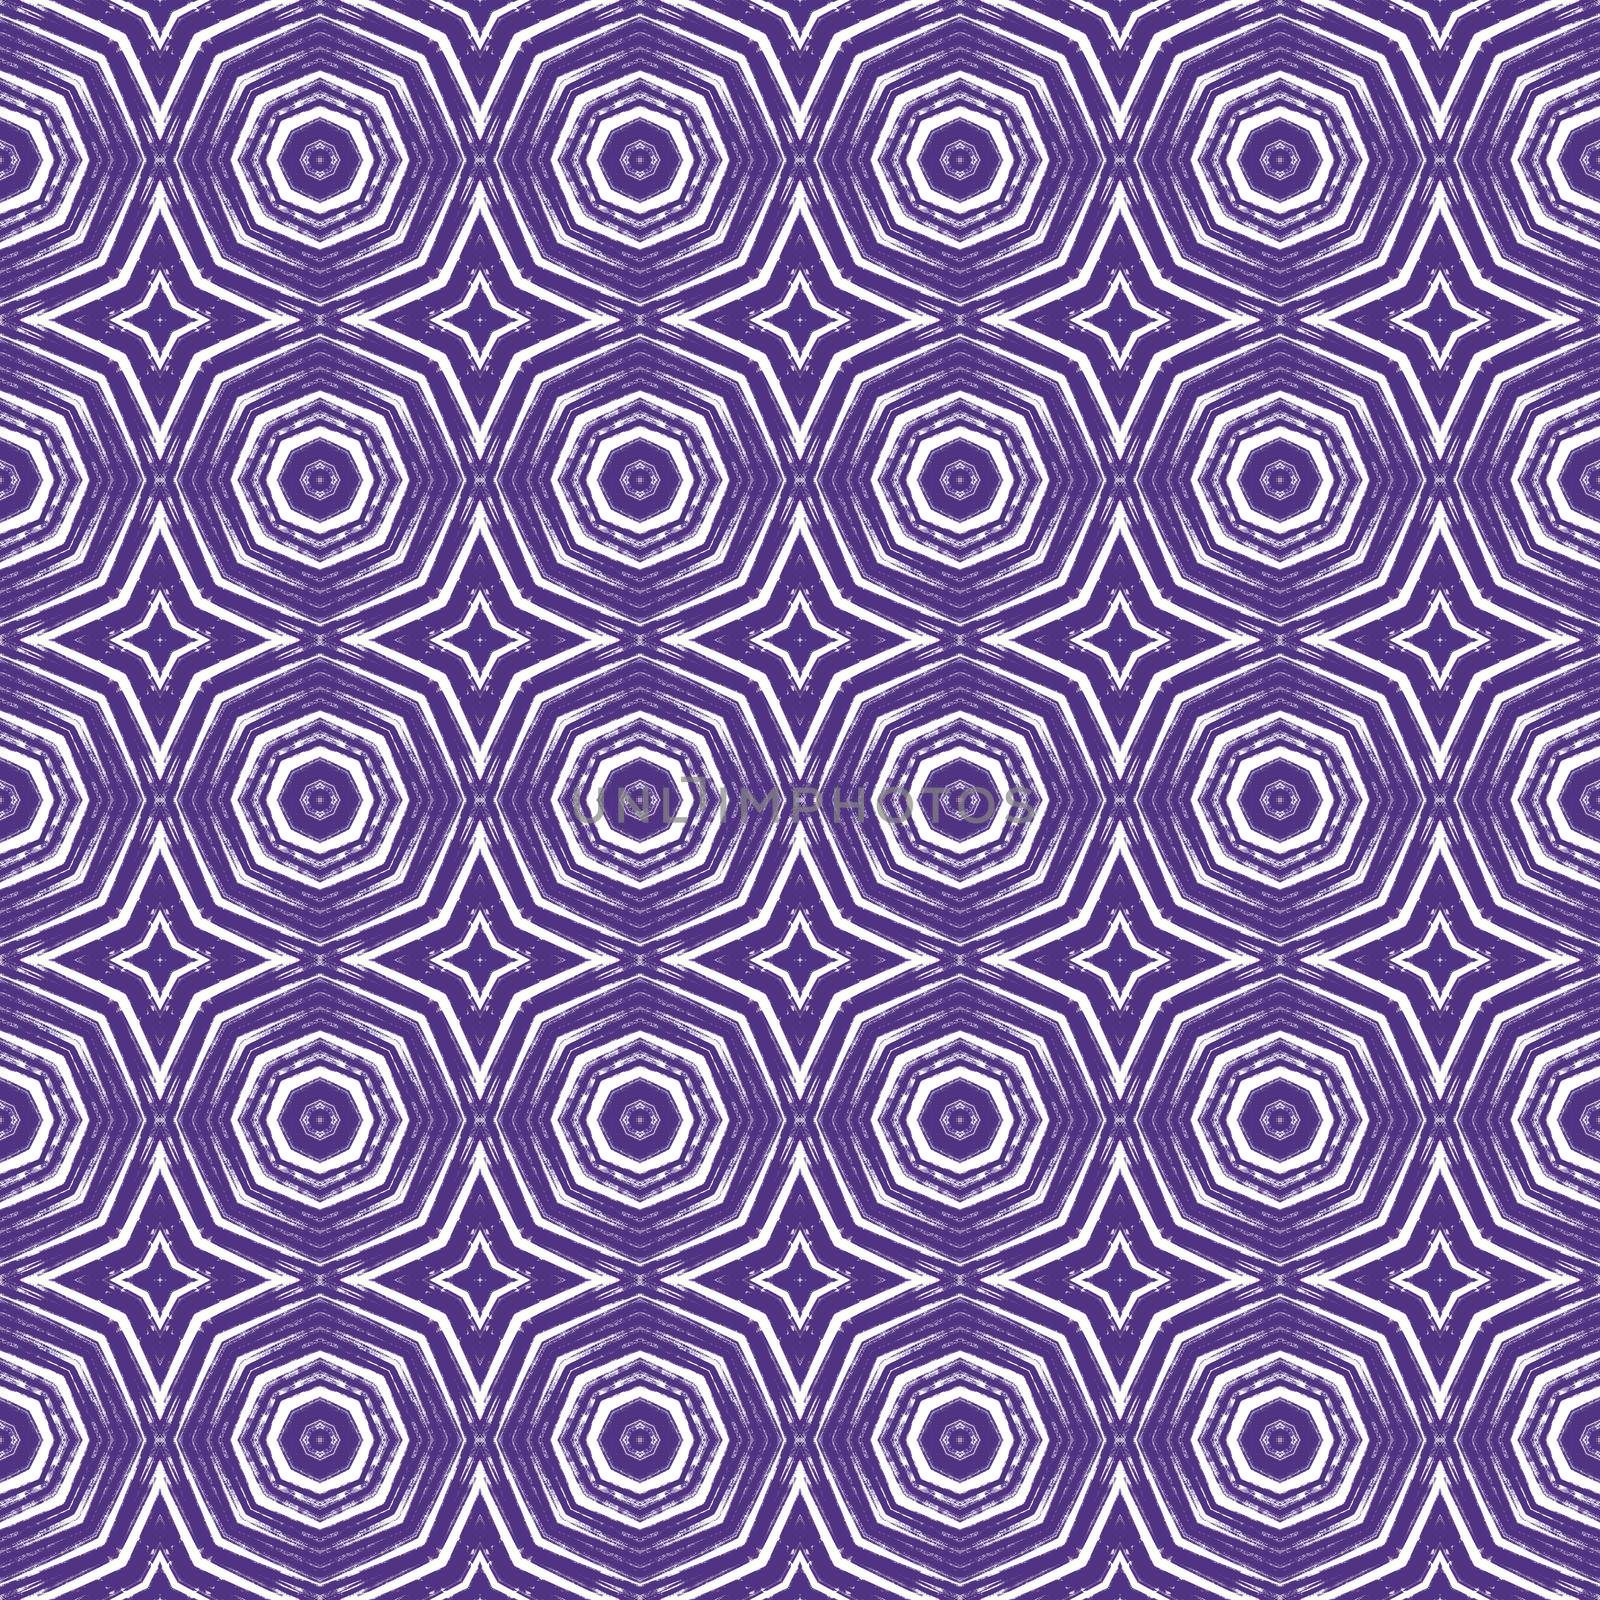 Chevron stripes design. Purple symmetrical by beginagain